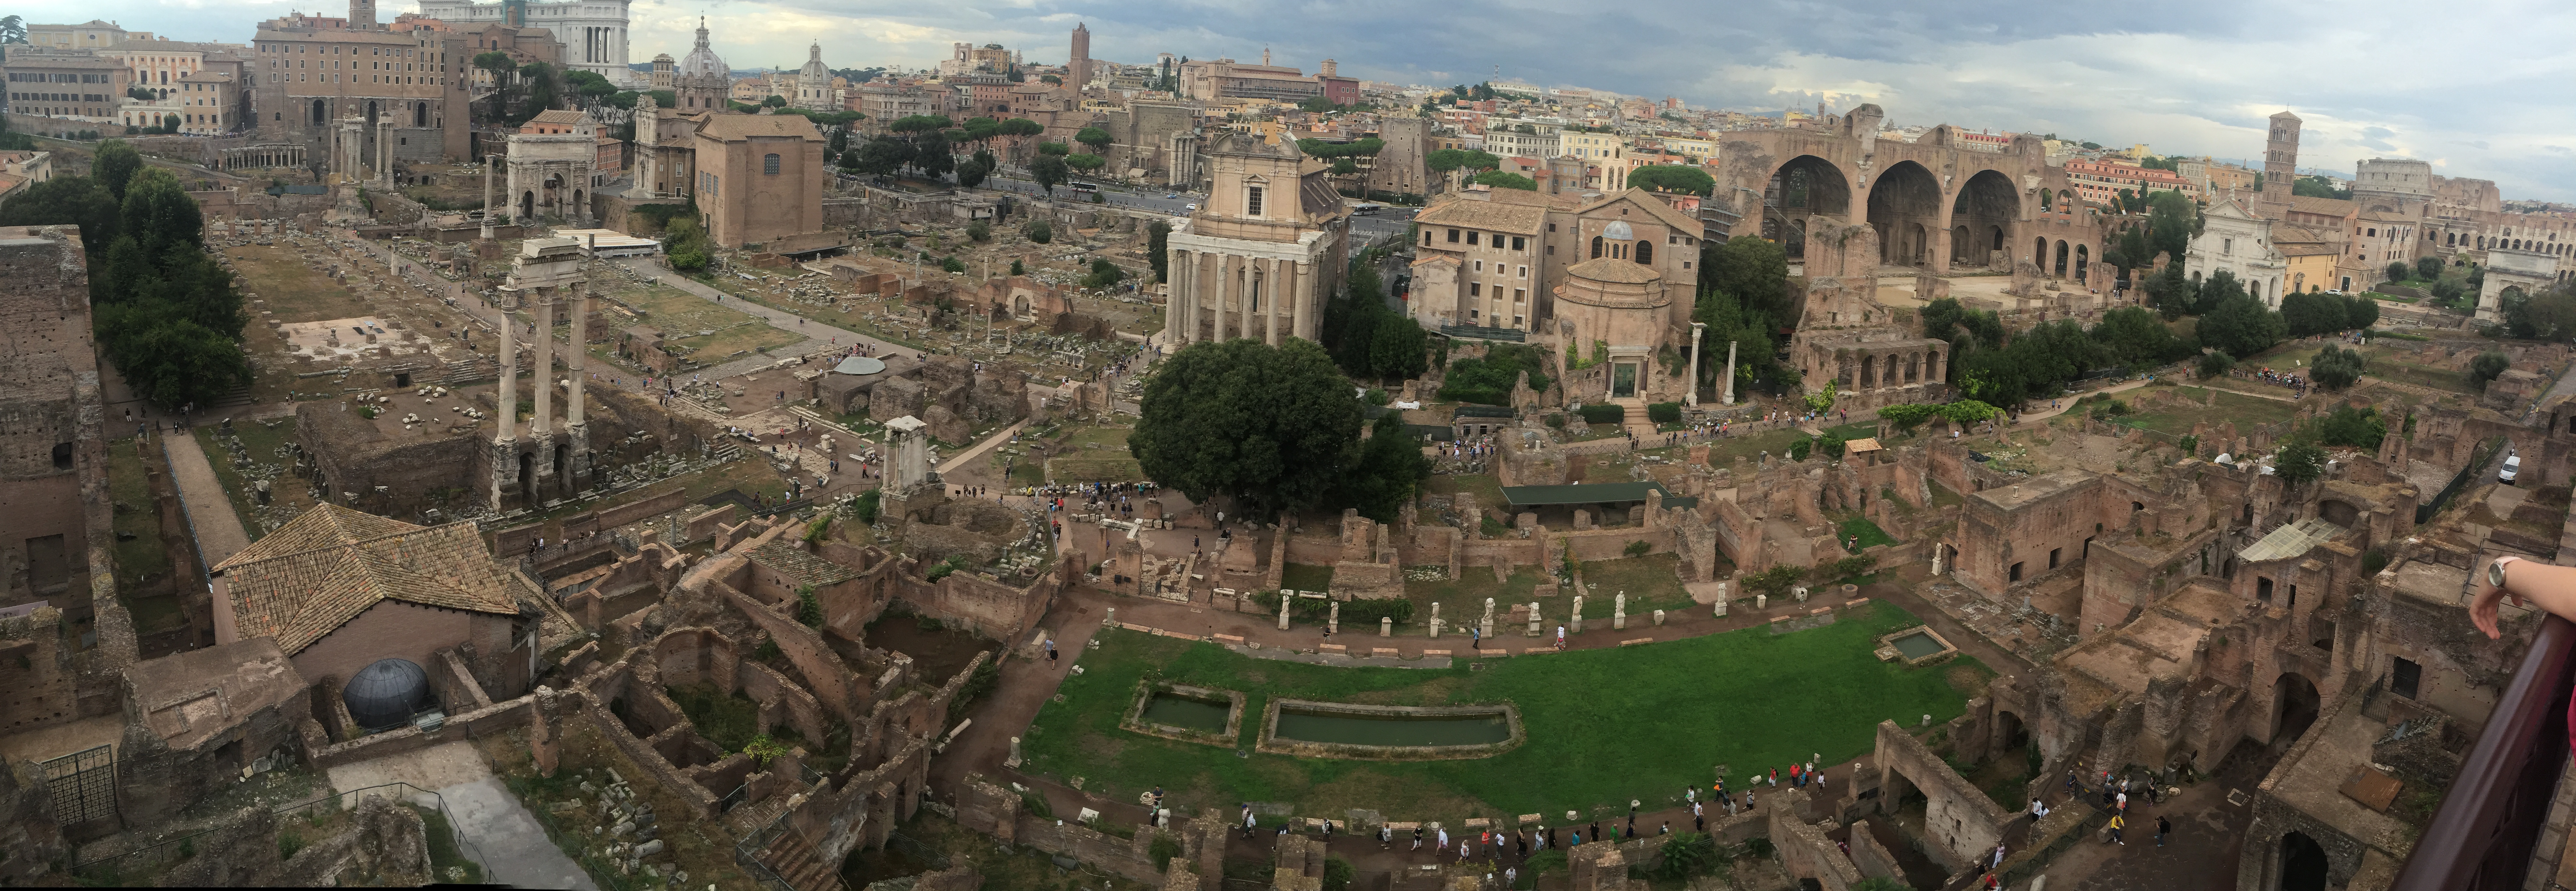 Округ древнего рима. Палатинский холм в Риме. Палатин холмы Рима. Вид на Колизей с холма палатин. Палатинский дворец Септимия севера.